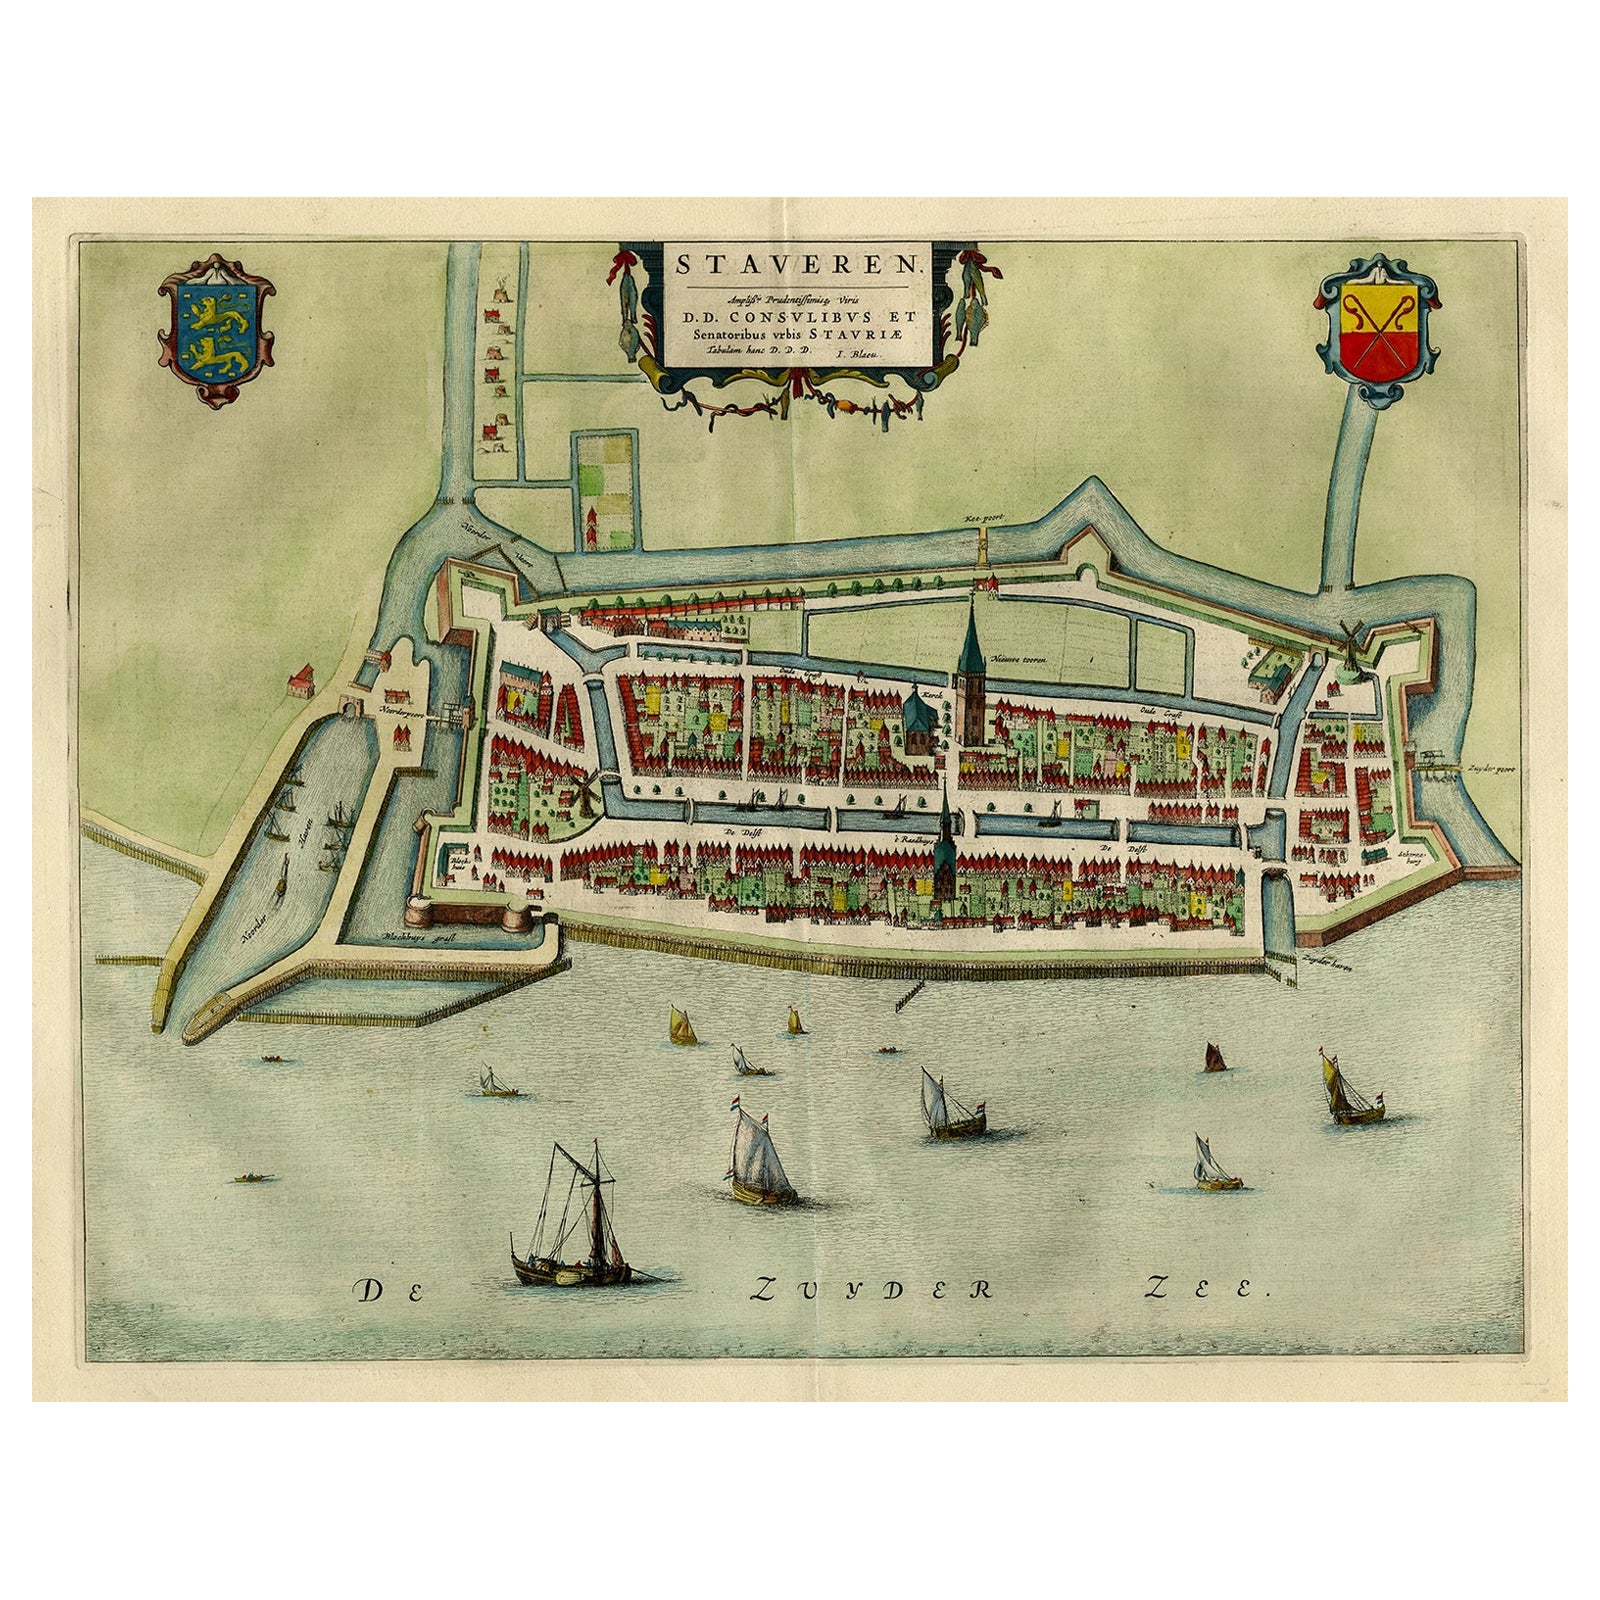 Original Antique Map of the City of Stavoren, Friesland, The Netherlands, 1649